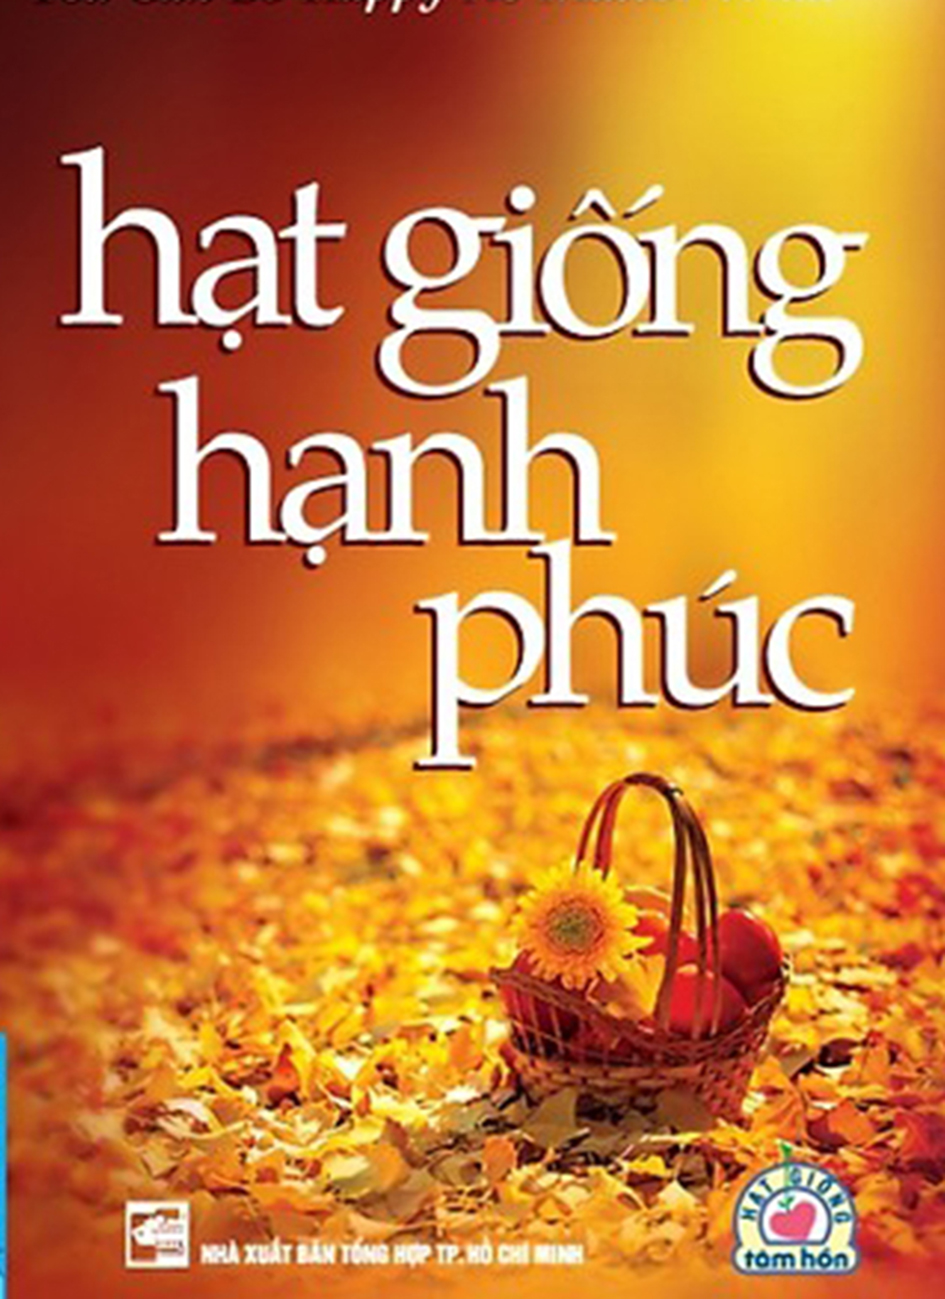 hat giong hanh phuc